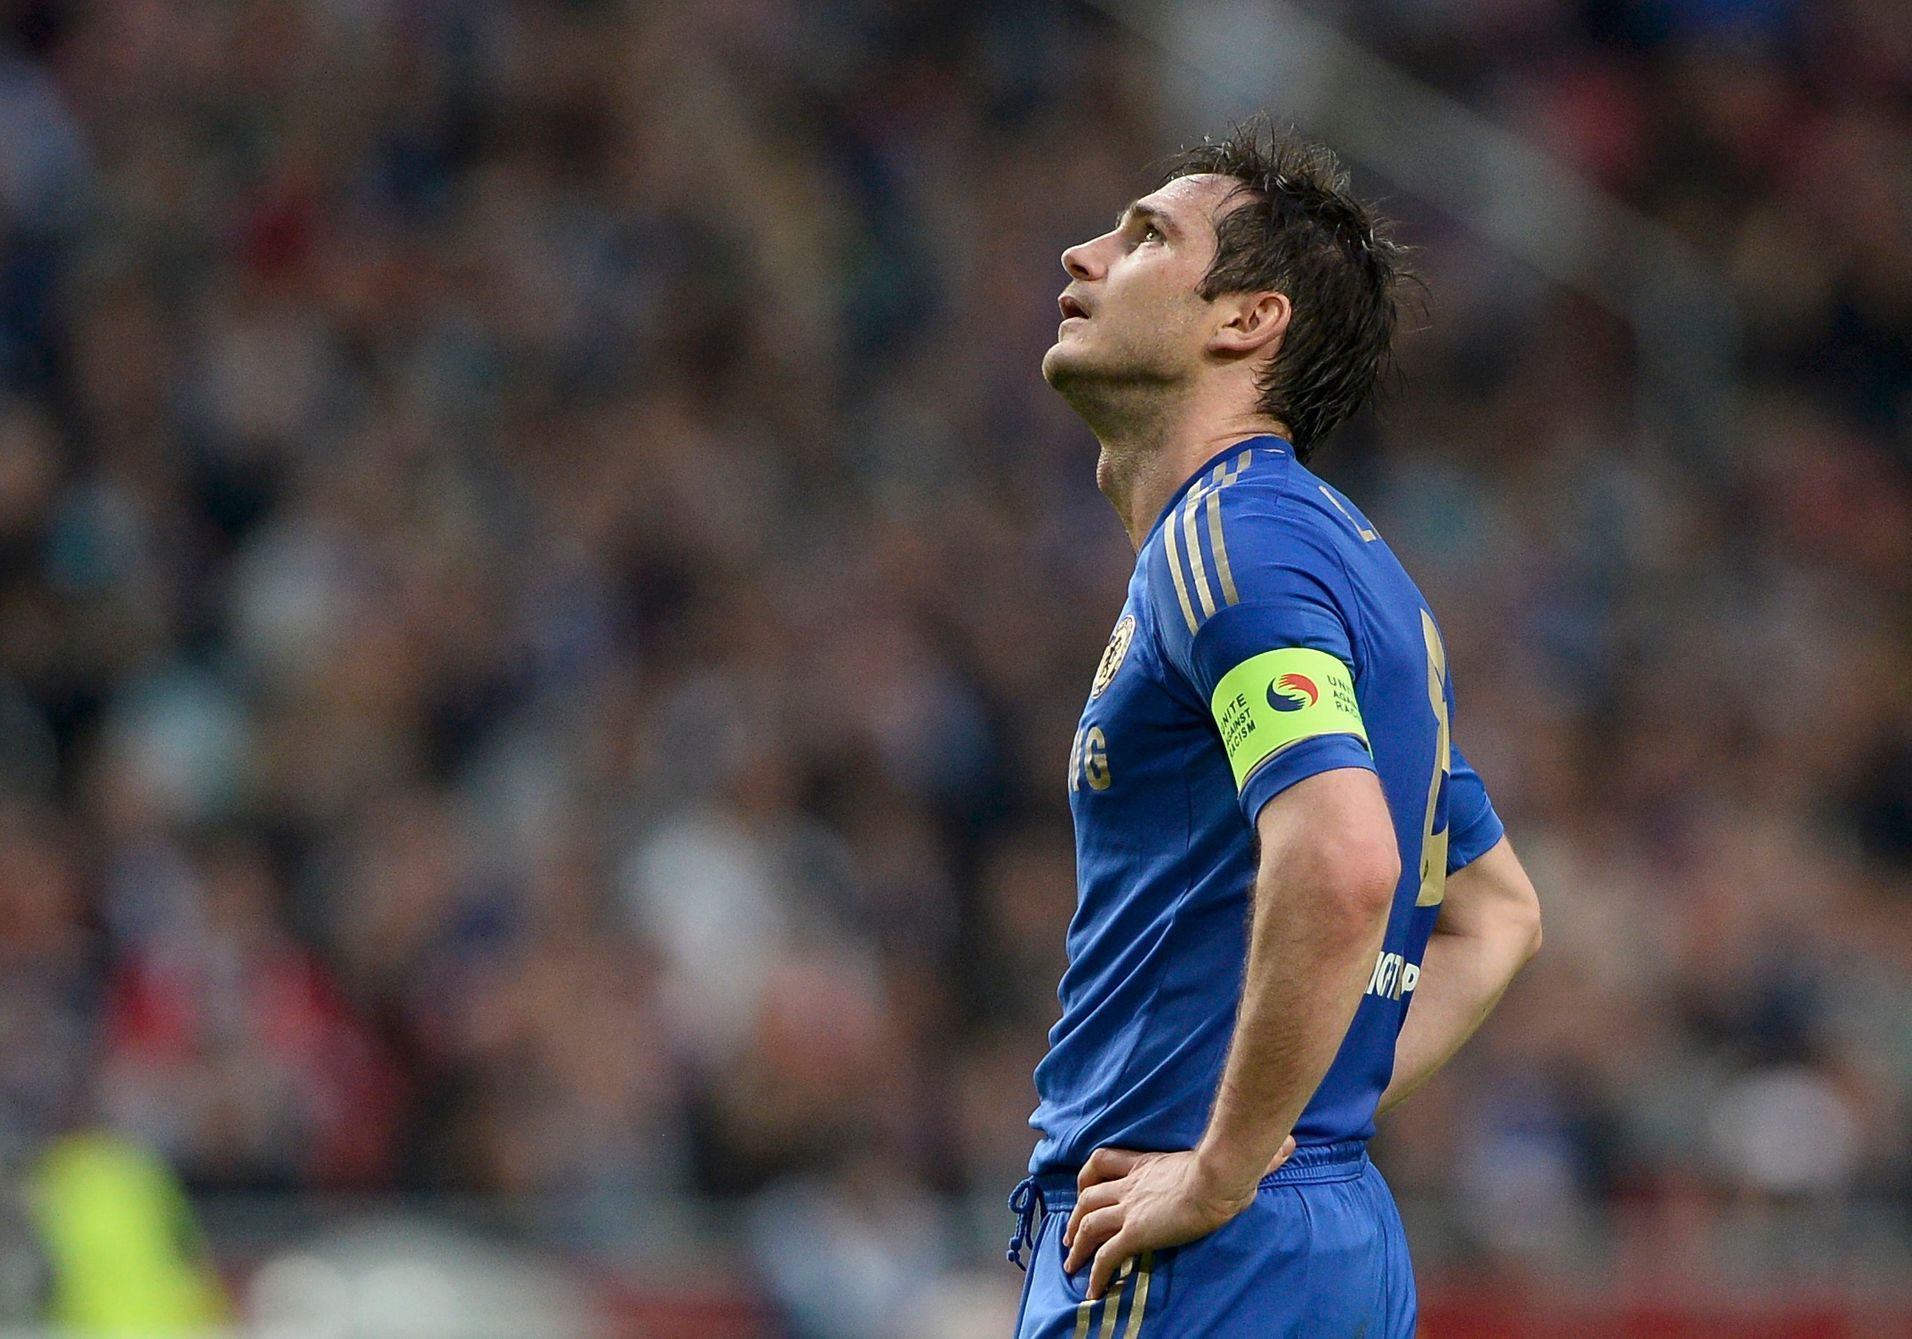 Fotbal, finále Evropské ligy, Chelsea - Benfica: Frank Lampard